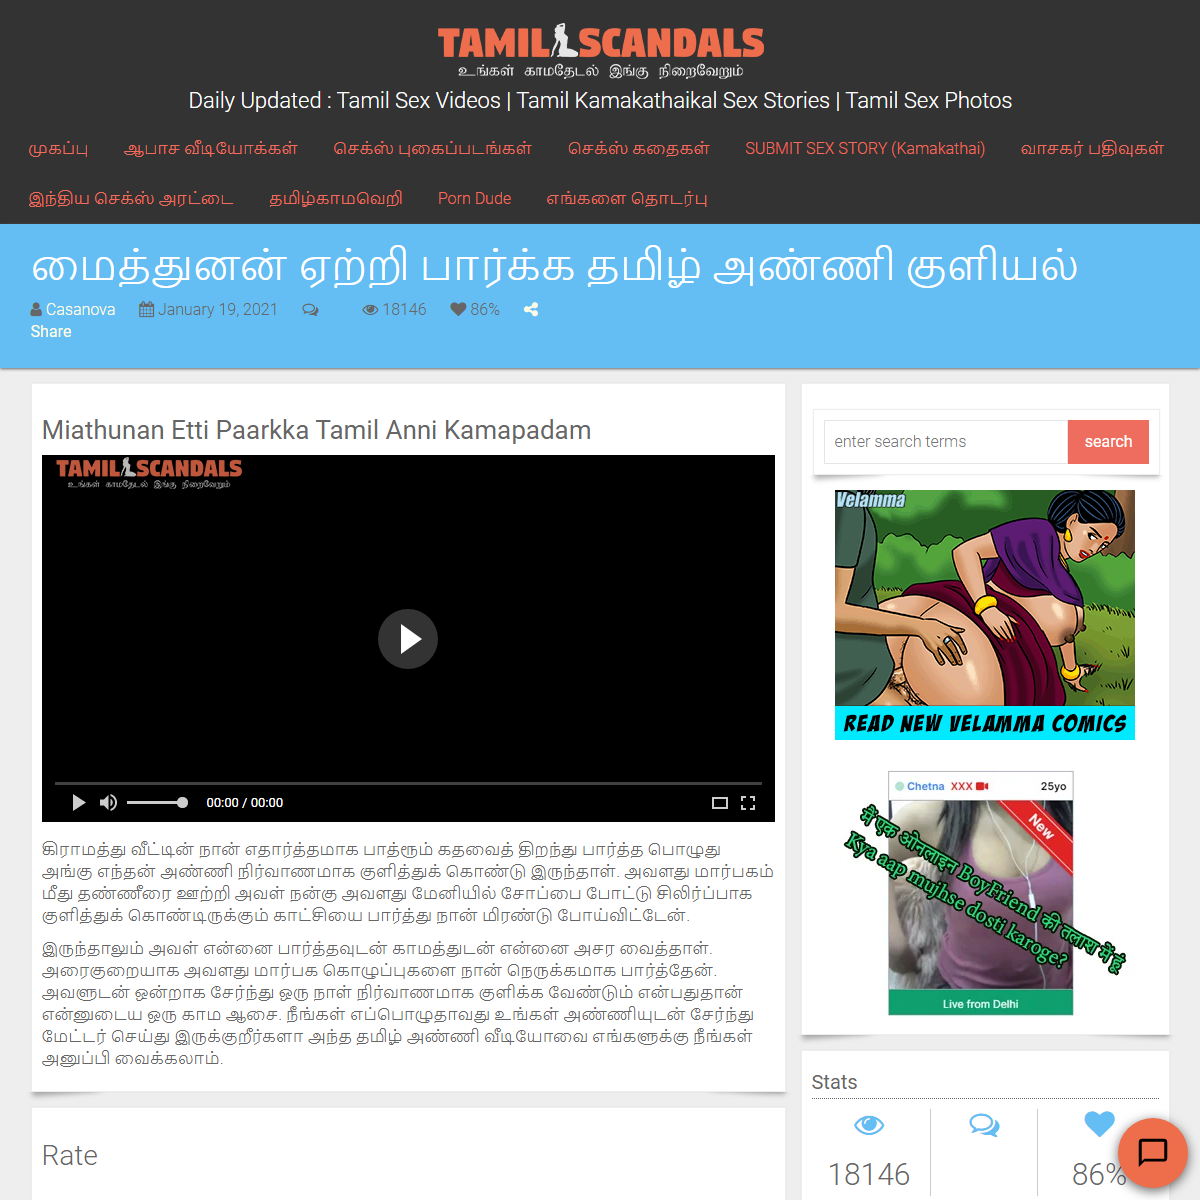 A complete backup of https://www.tamilscandals.com/bathroom/anni-kuliyal-kamapadam/